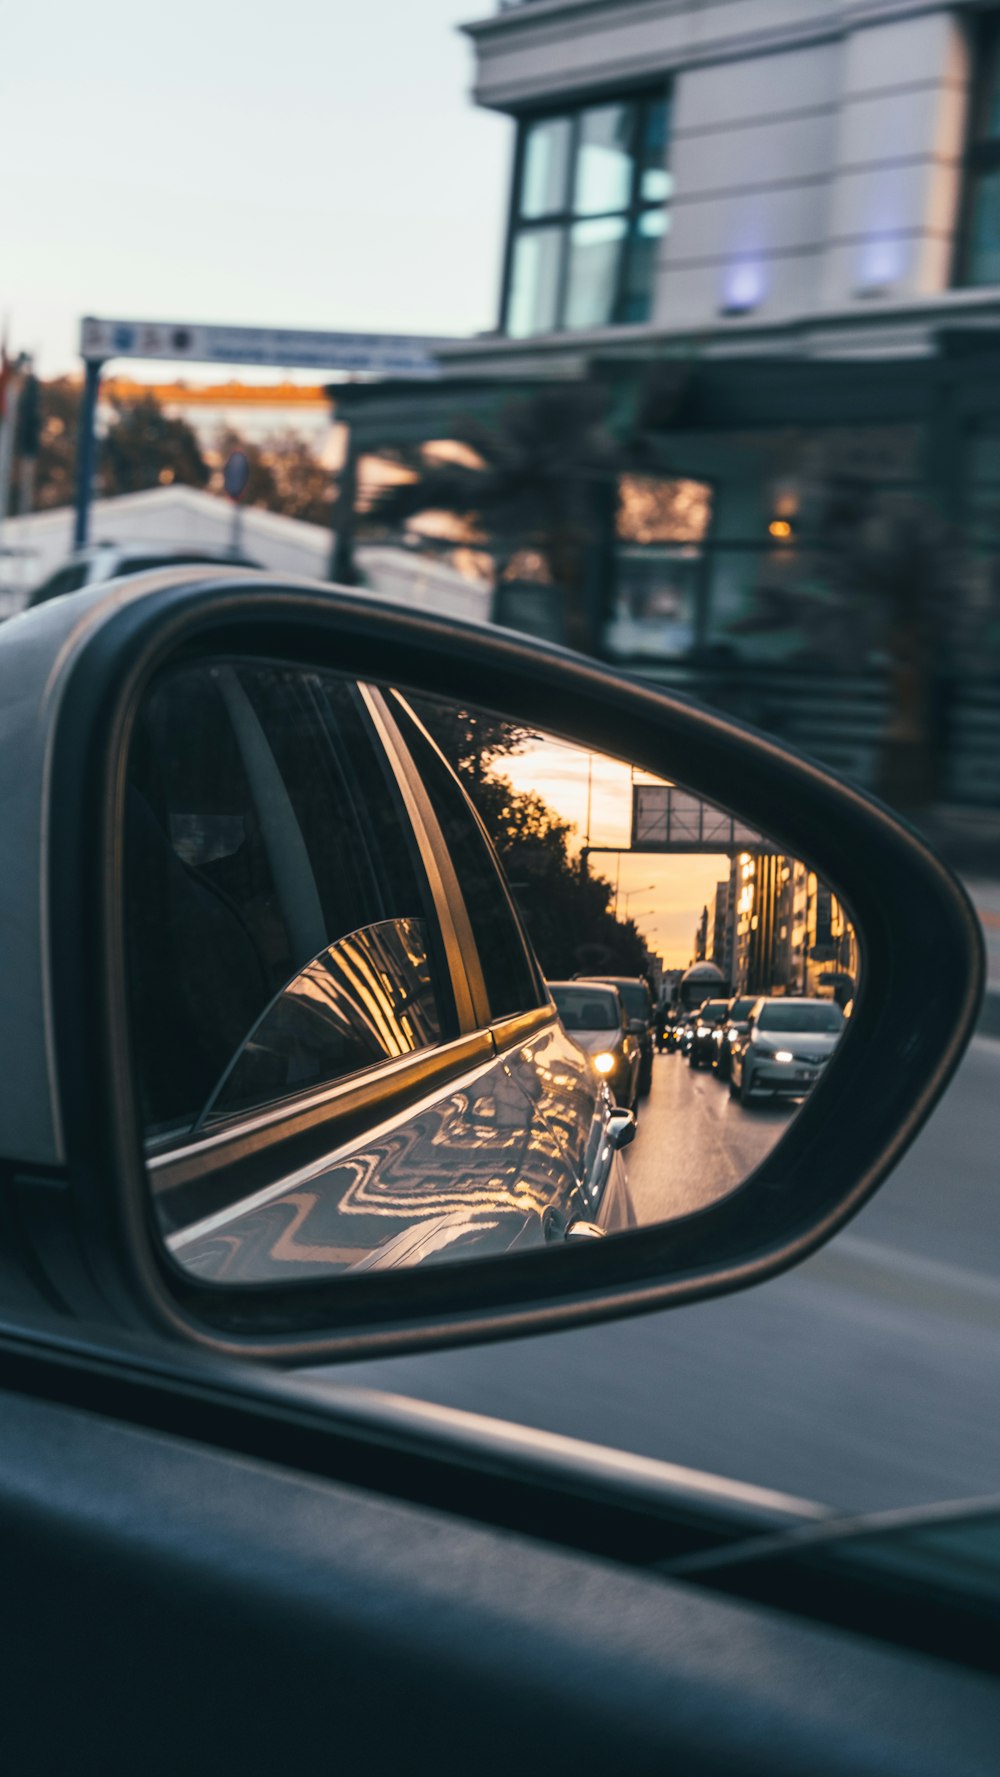 a rear view mirror on a car on a city street